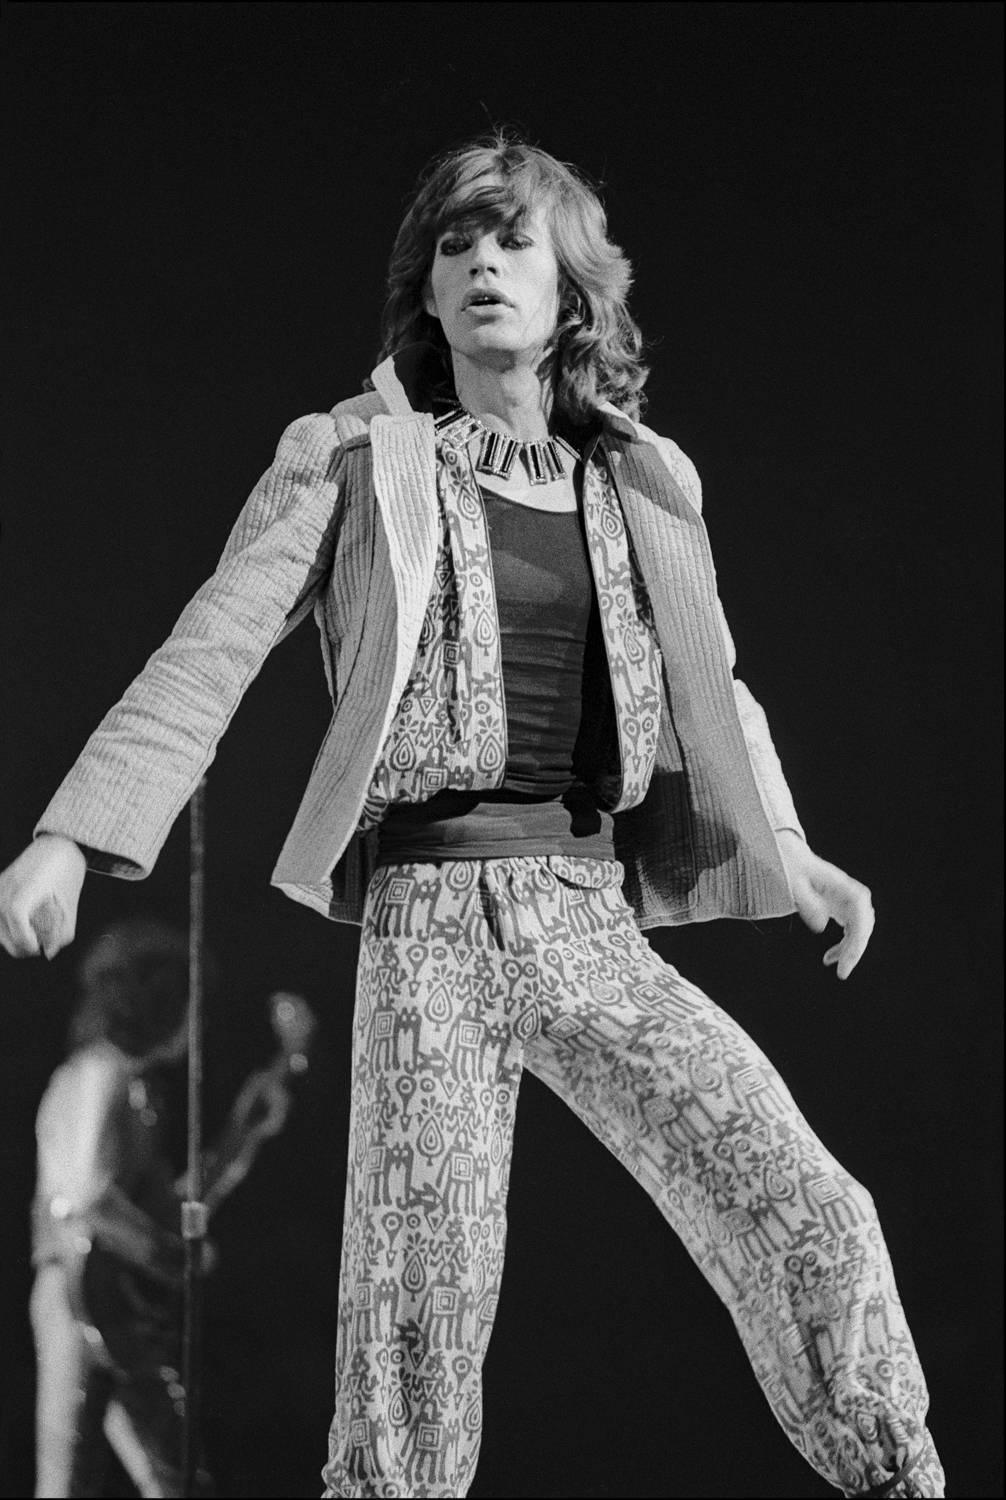 Allan Tannenbaum Black and White Photograph – Mick Jagger performt